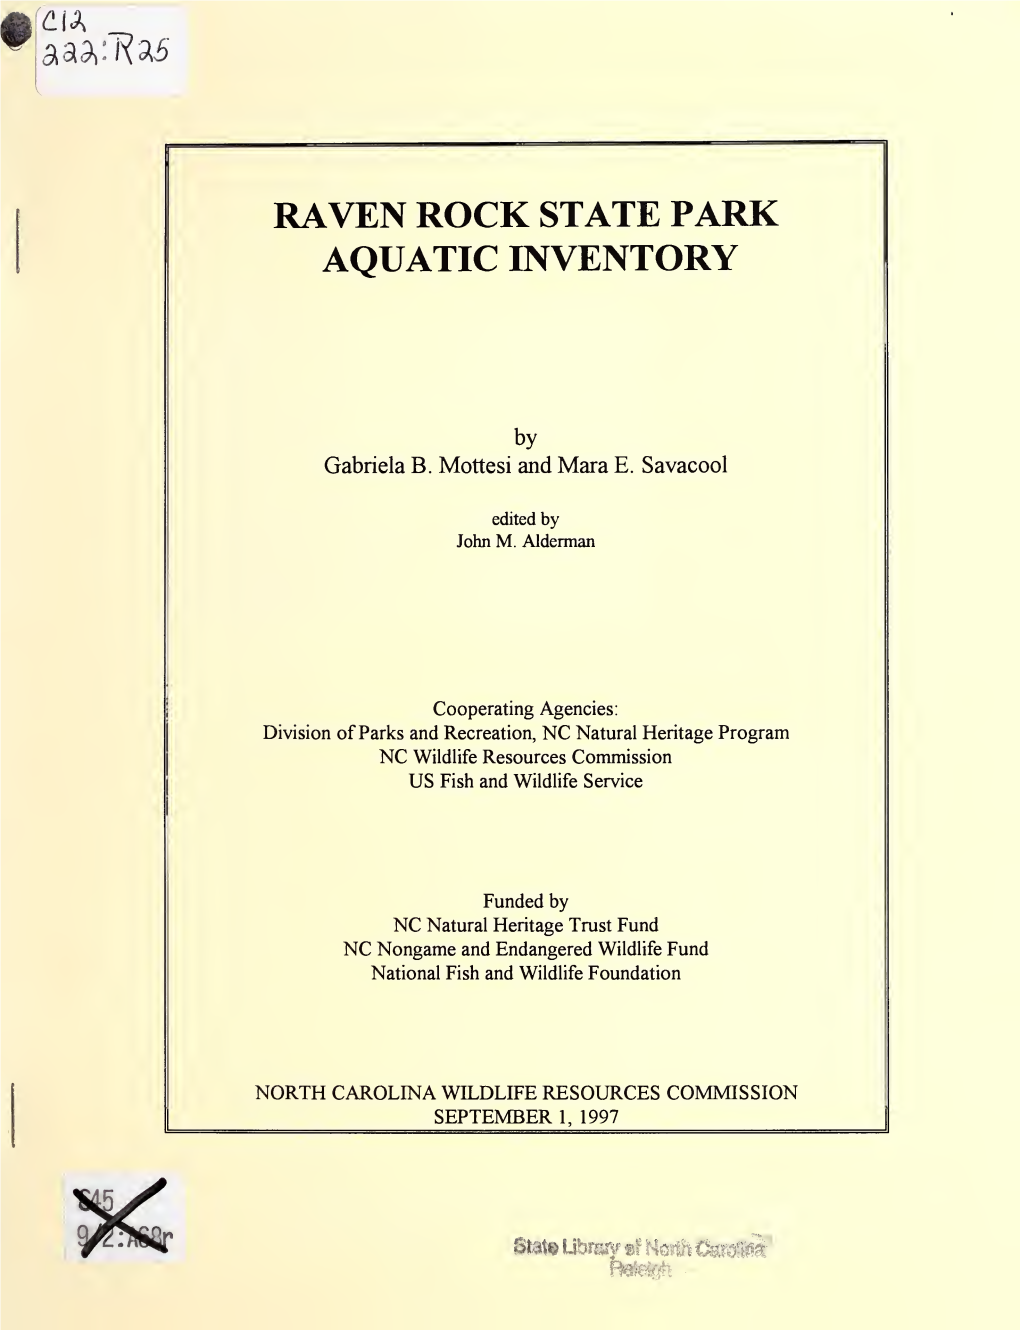 Raven Rock State Park Aquatic Inventory / by Gabriela B. Mottesi